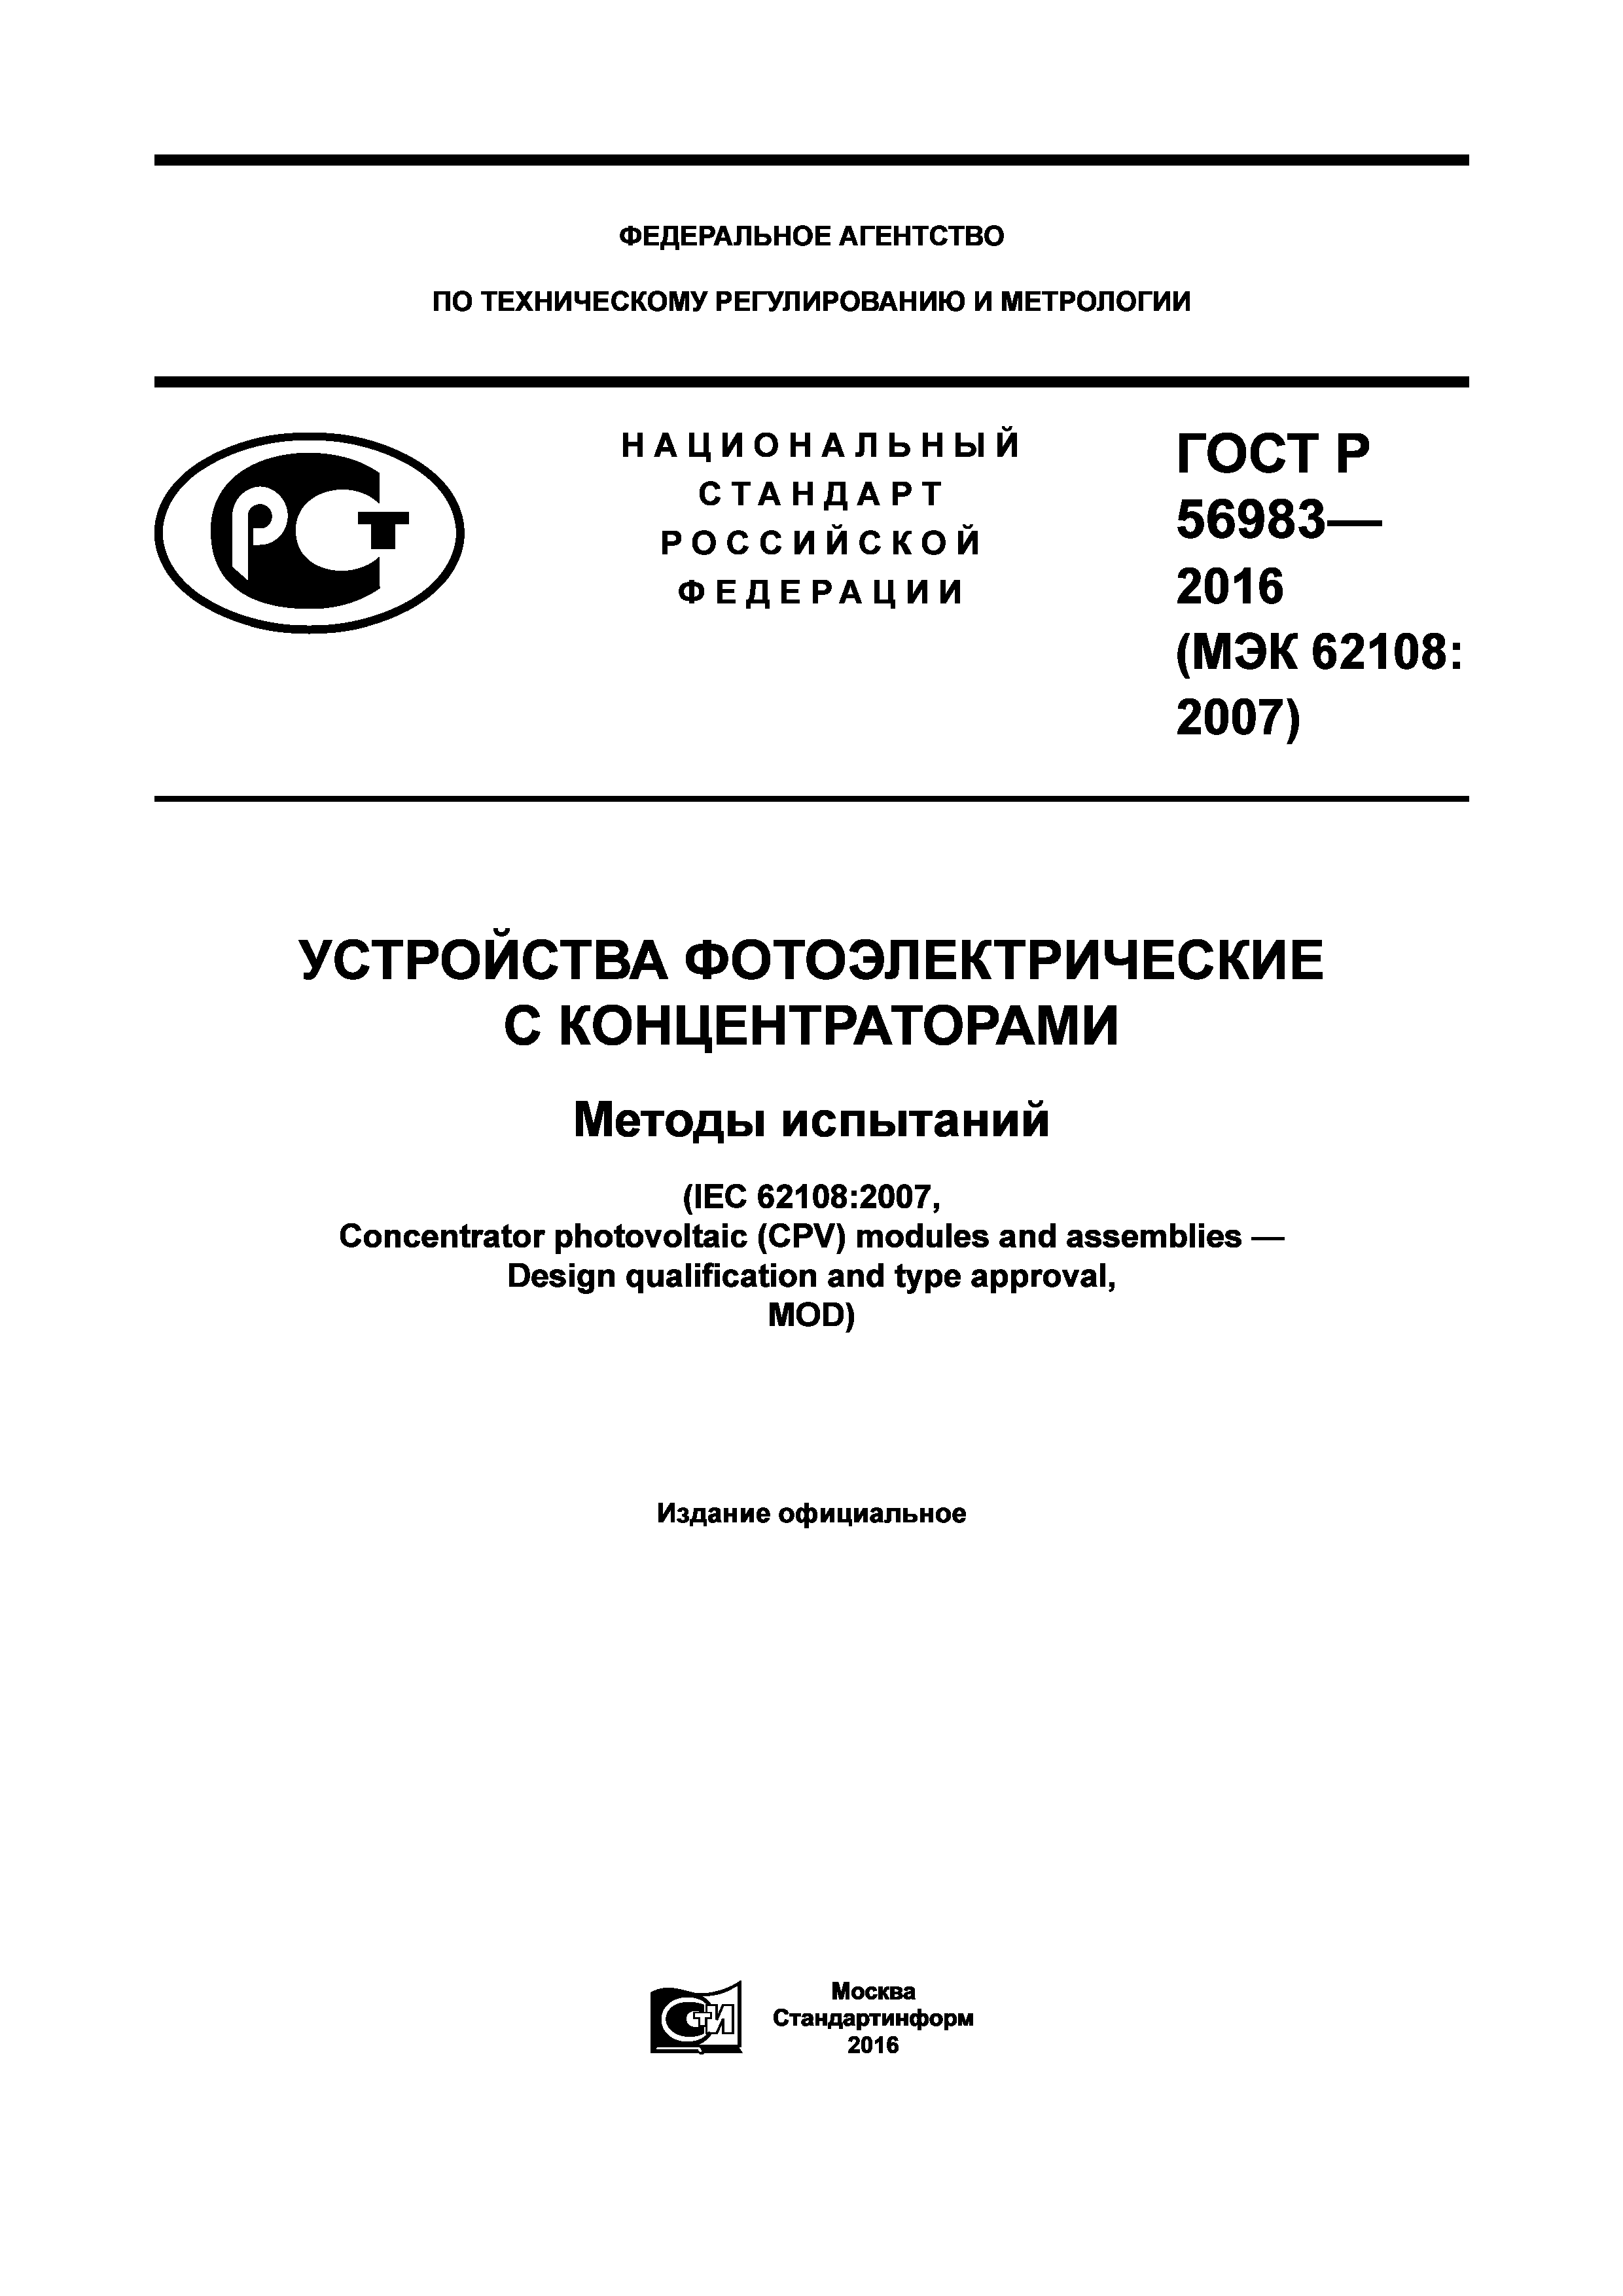 ГОСТ Р 56983-2016